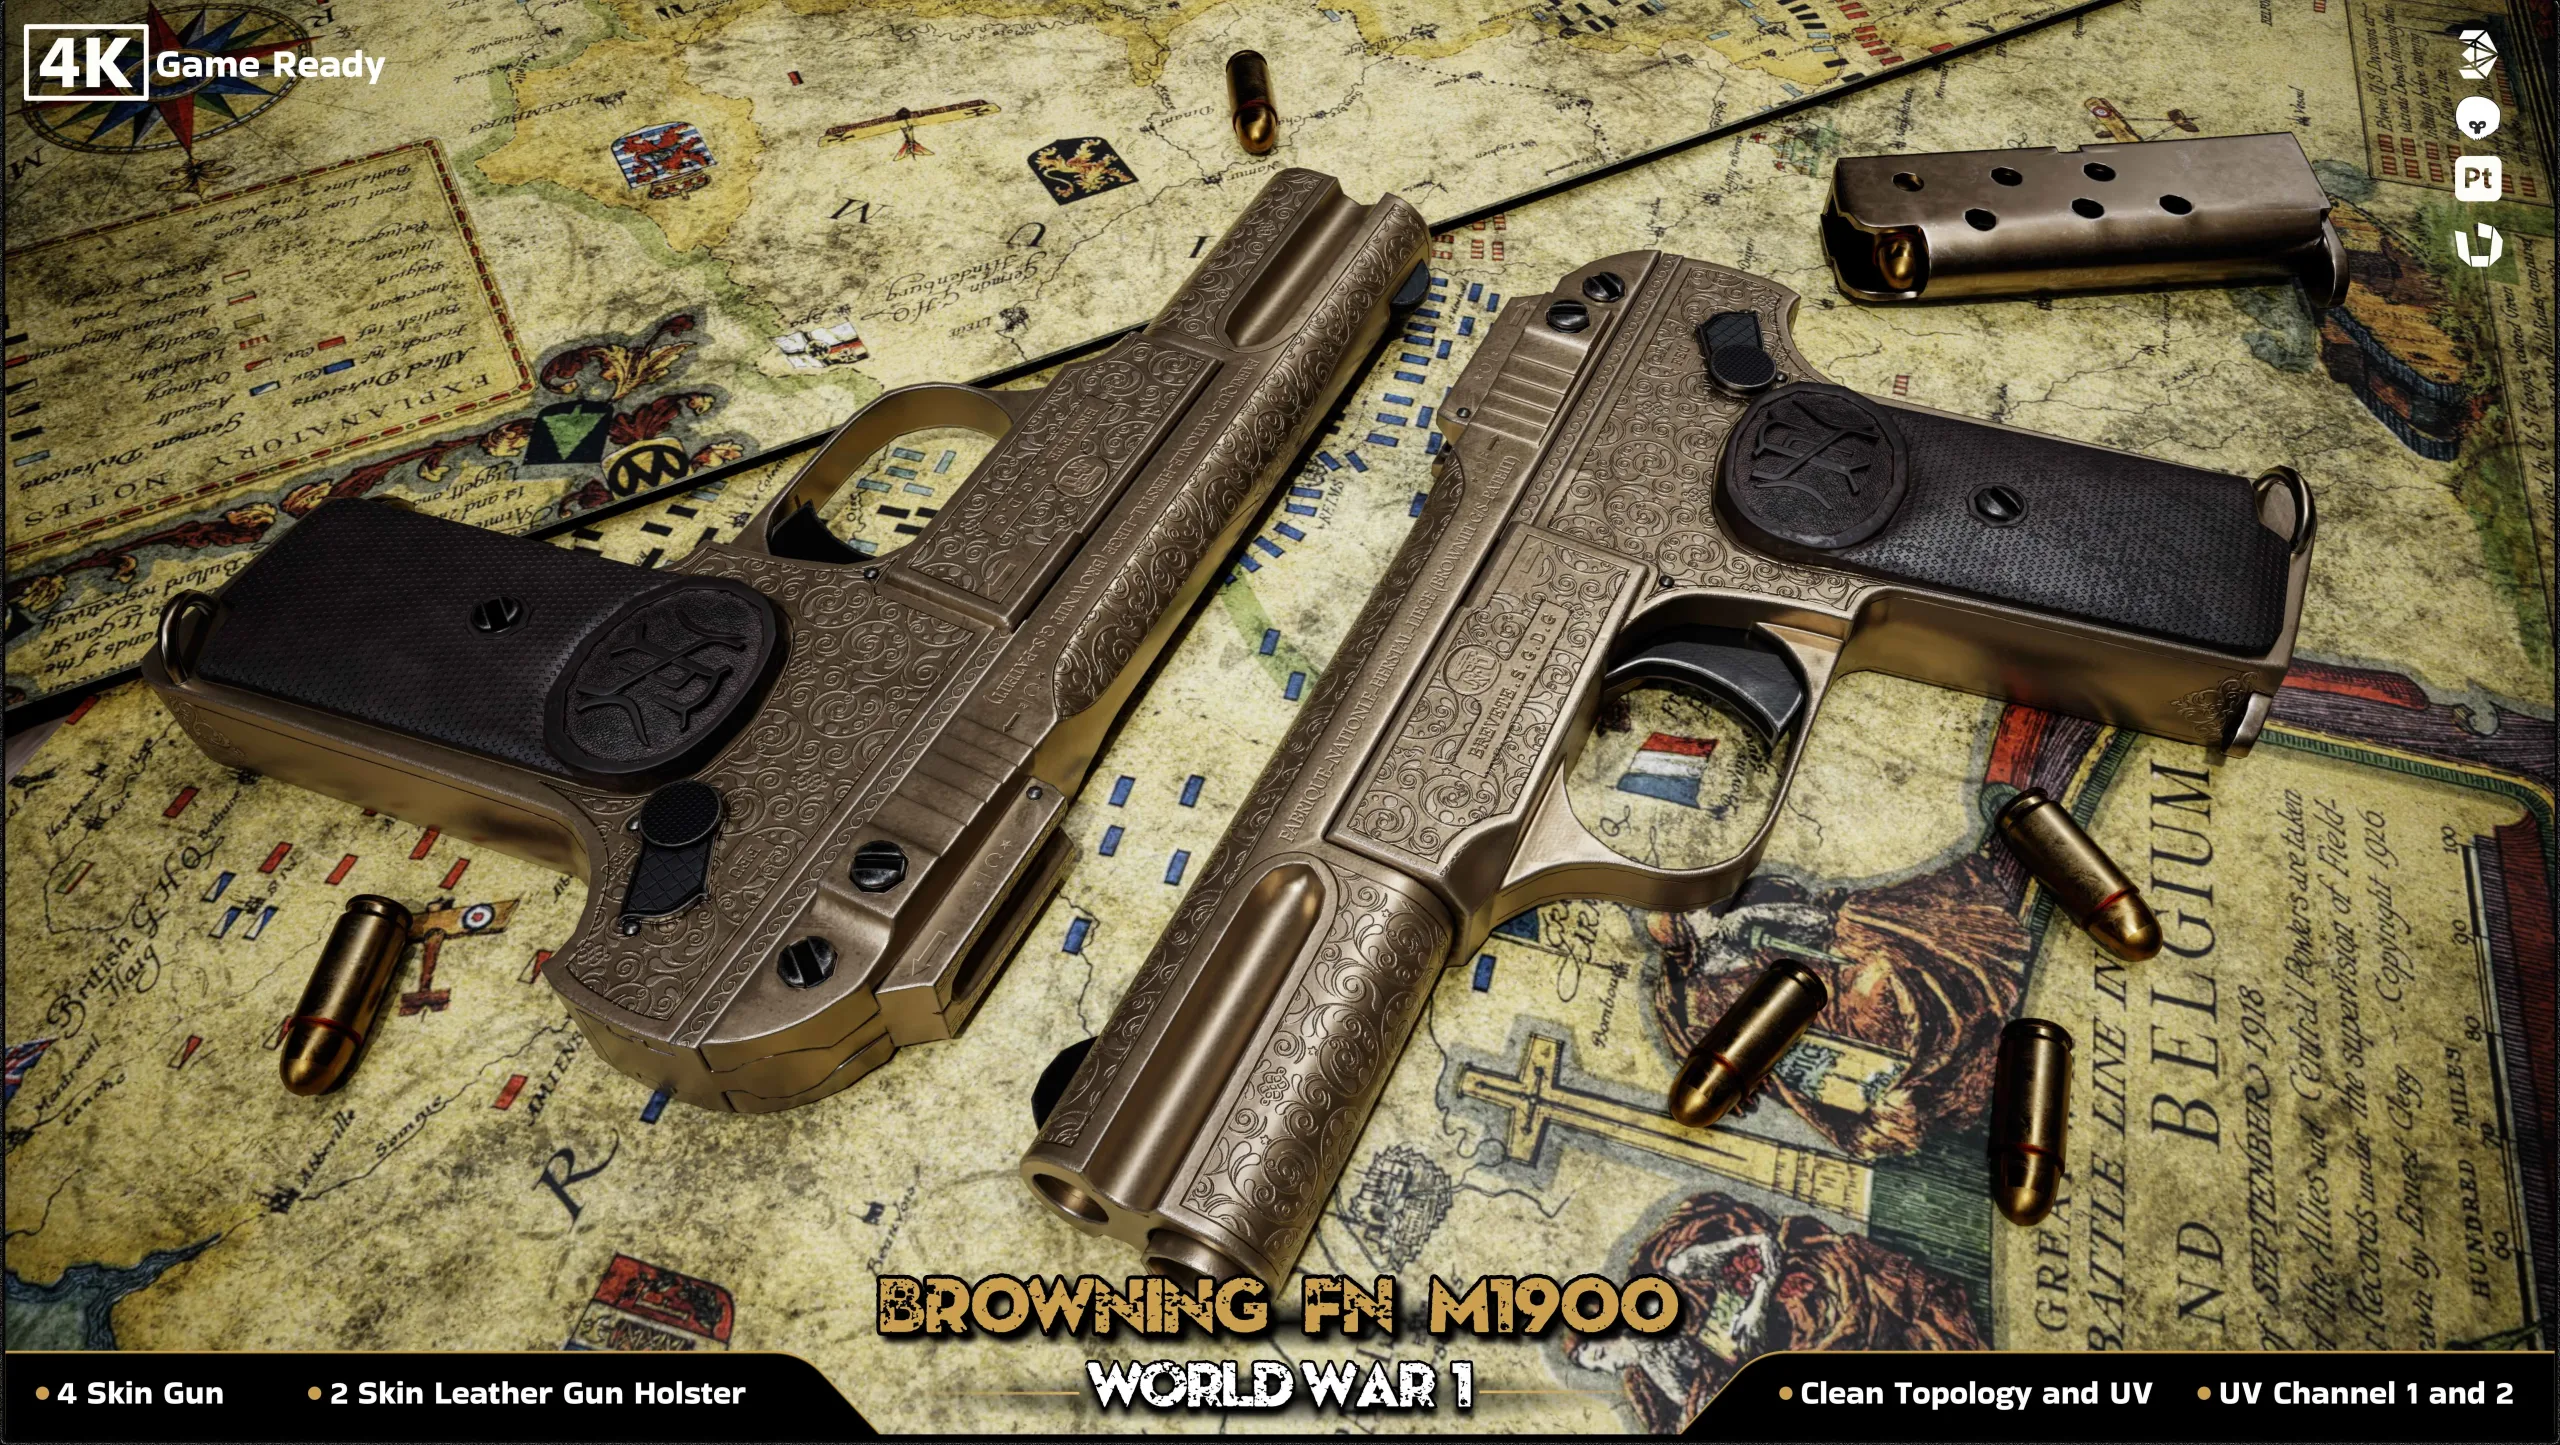 Browning FN M 1900 Colt World War / 3D Model + Full Tutorial